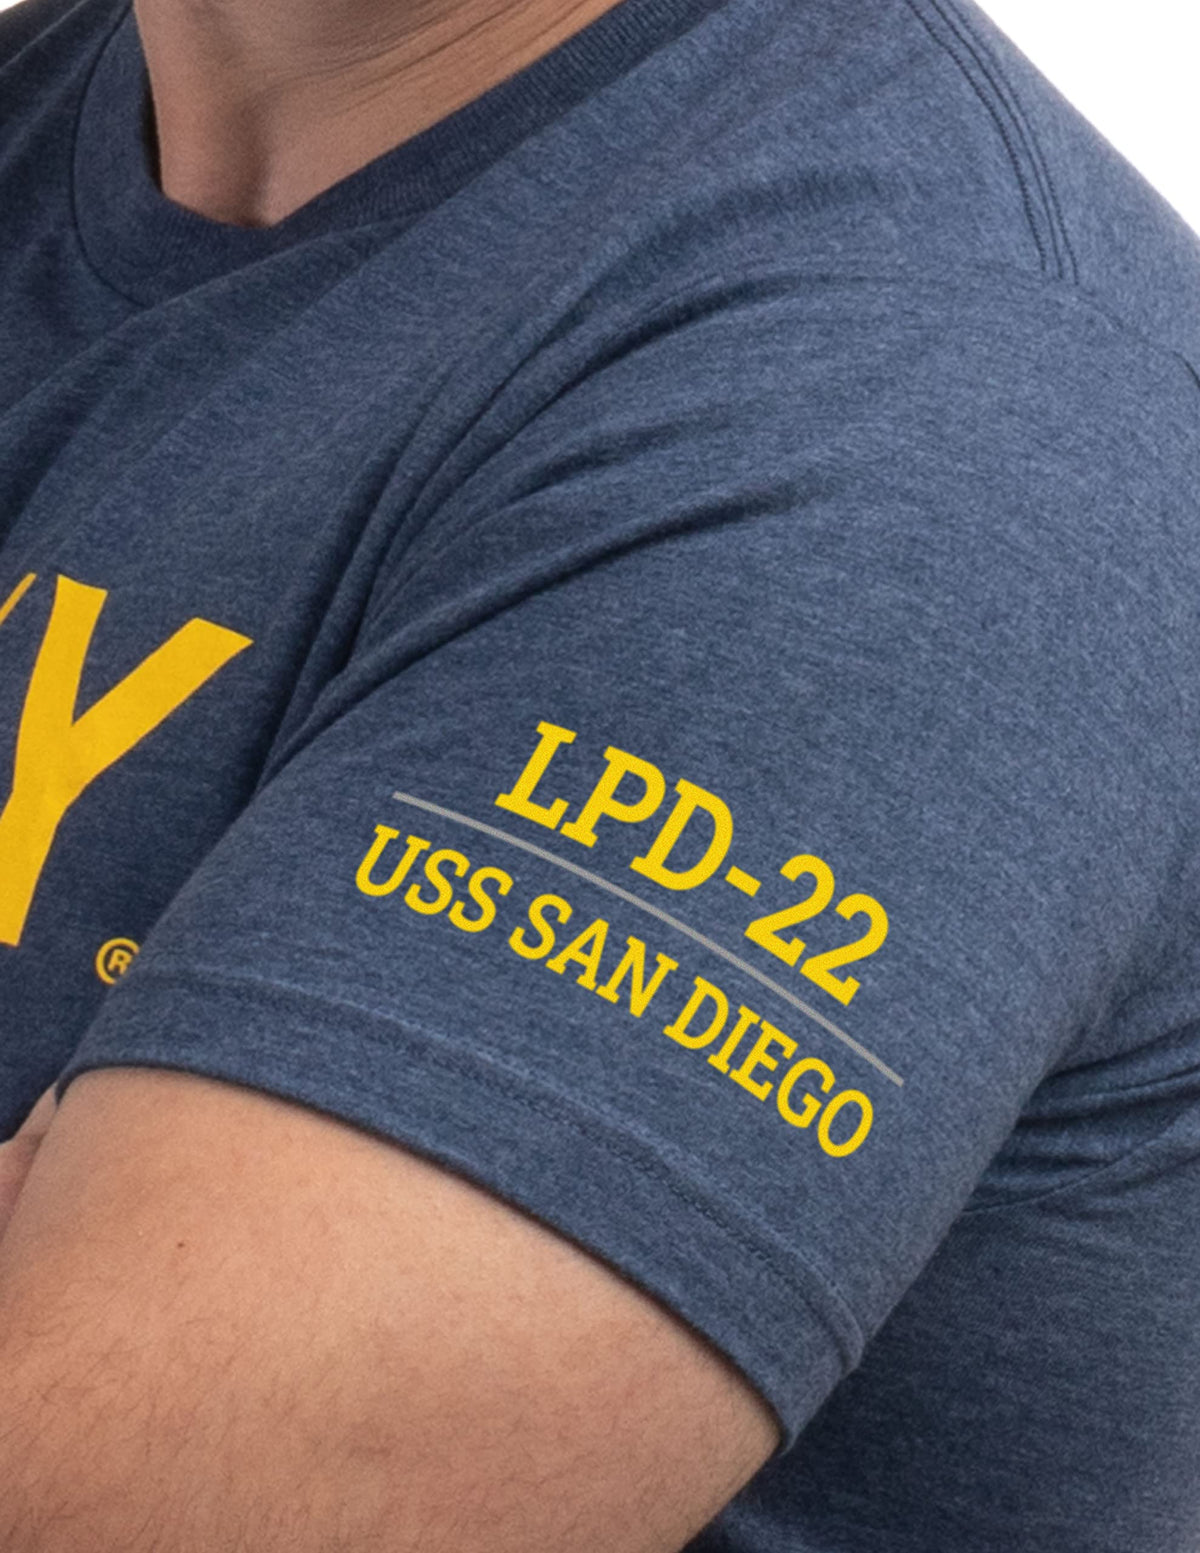 USS San Diego, LPD-22 | U.S. Navy Sailor Veteran USN United States Naval T-shirt for Men Women